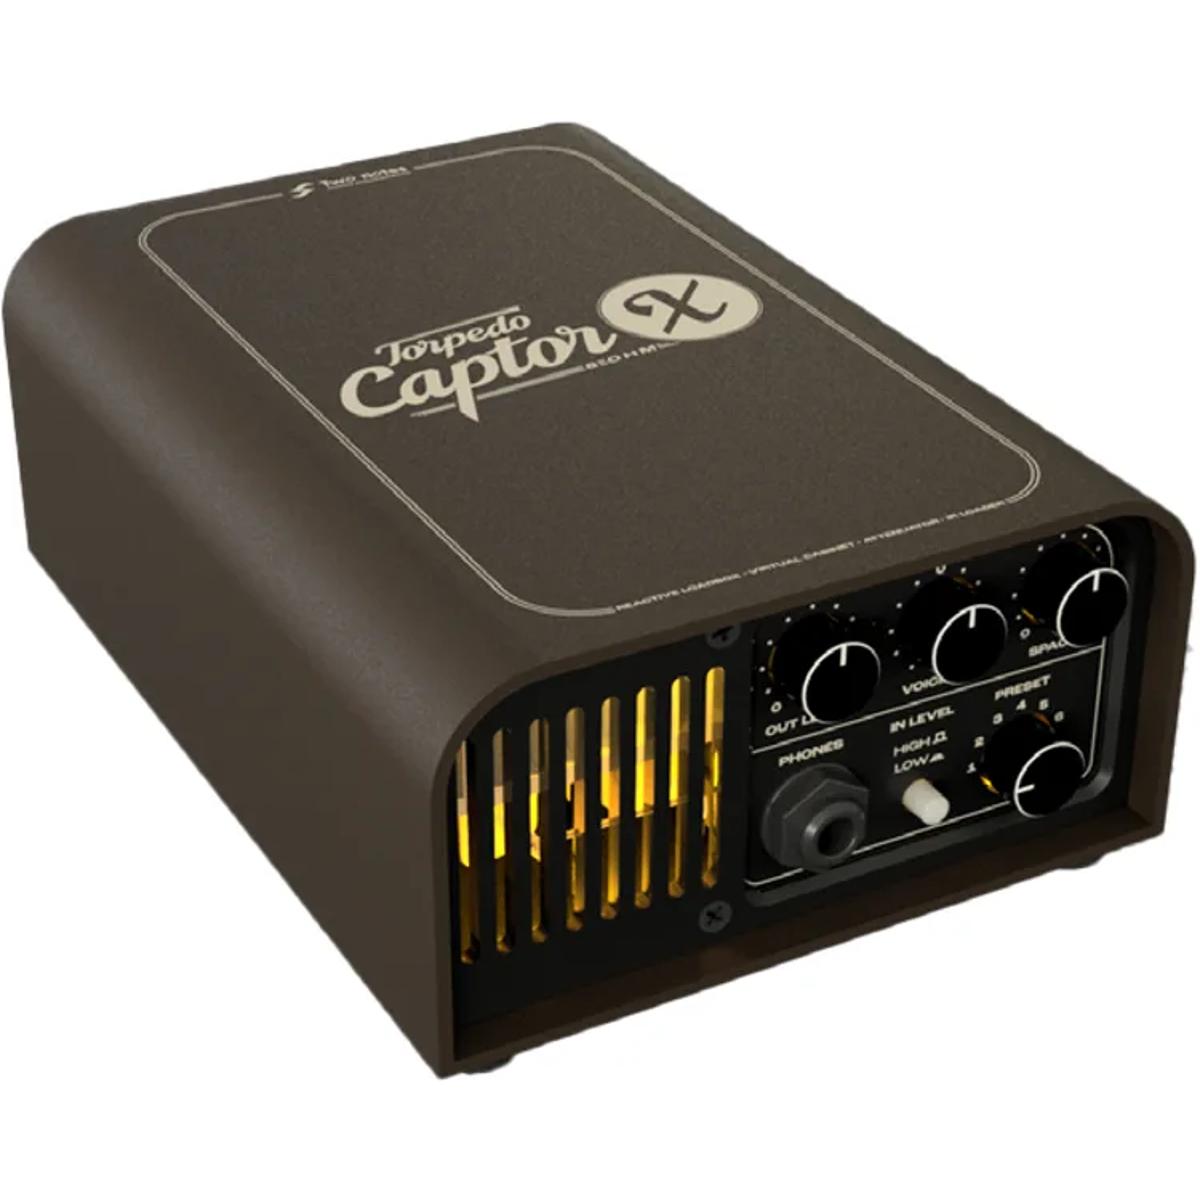 Two Notes Torpedo Captor X SE 8ohm Reactive Loadbox w/ Analog Speakersim & Attenuator - Special Edition